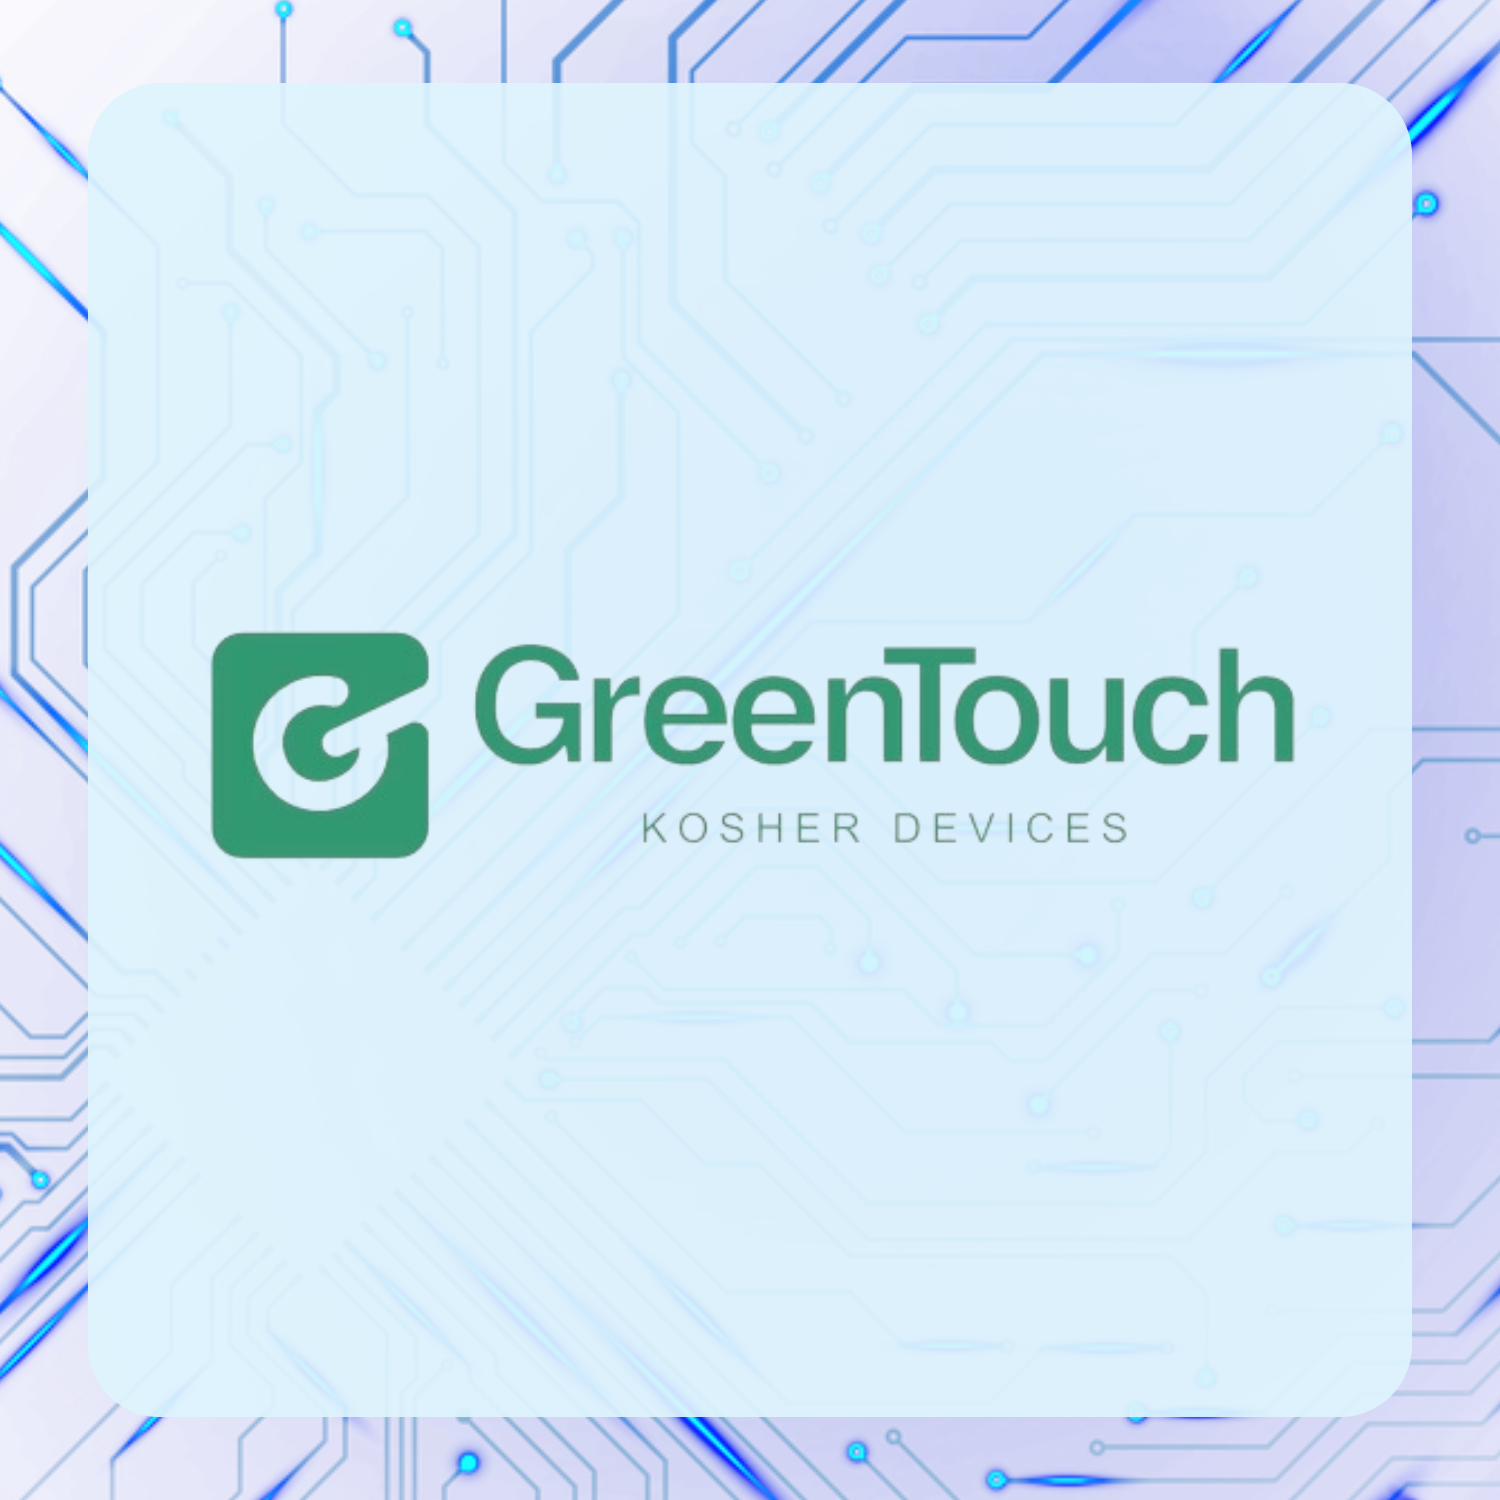 Greentouch